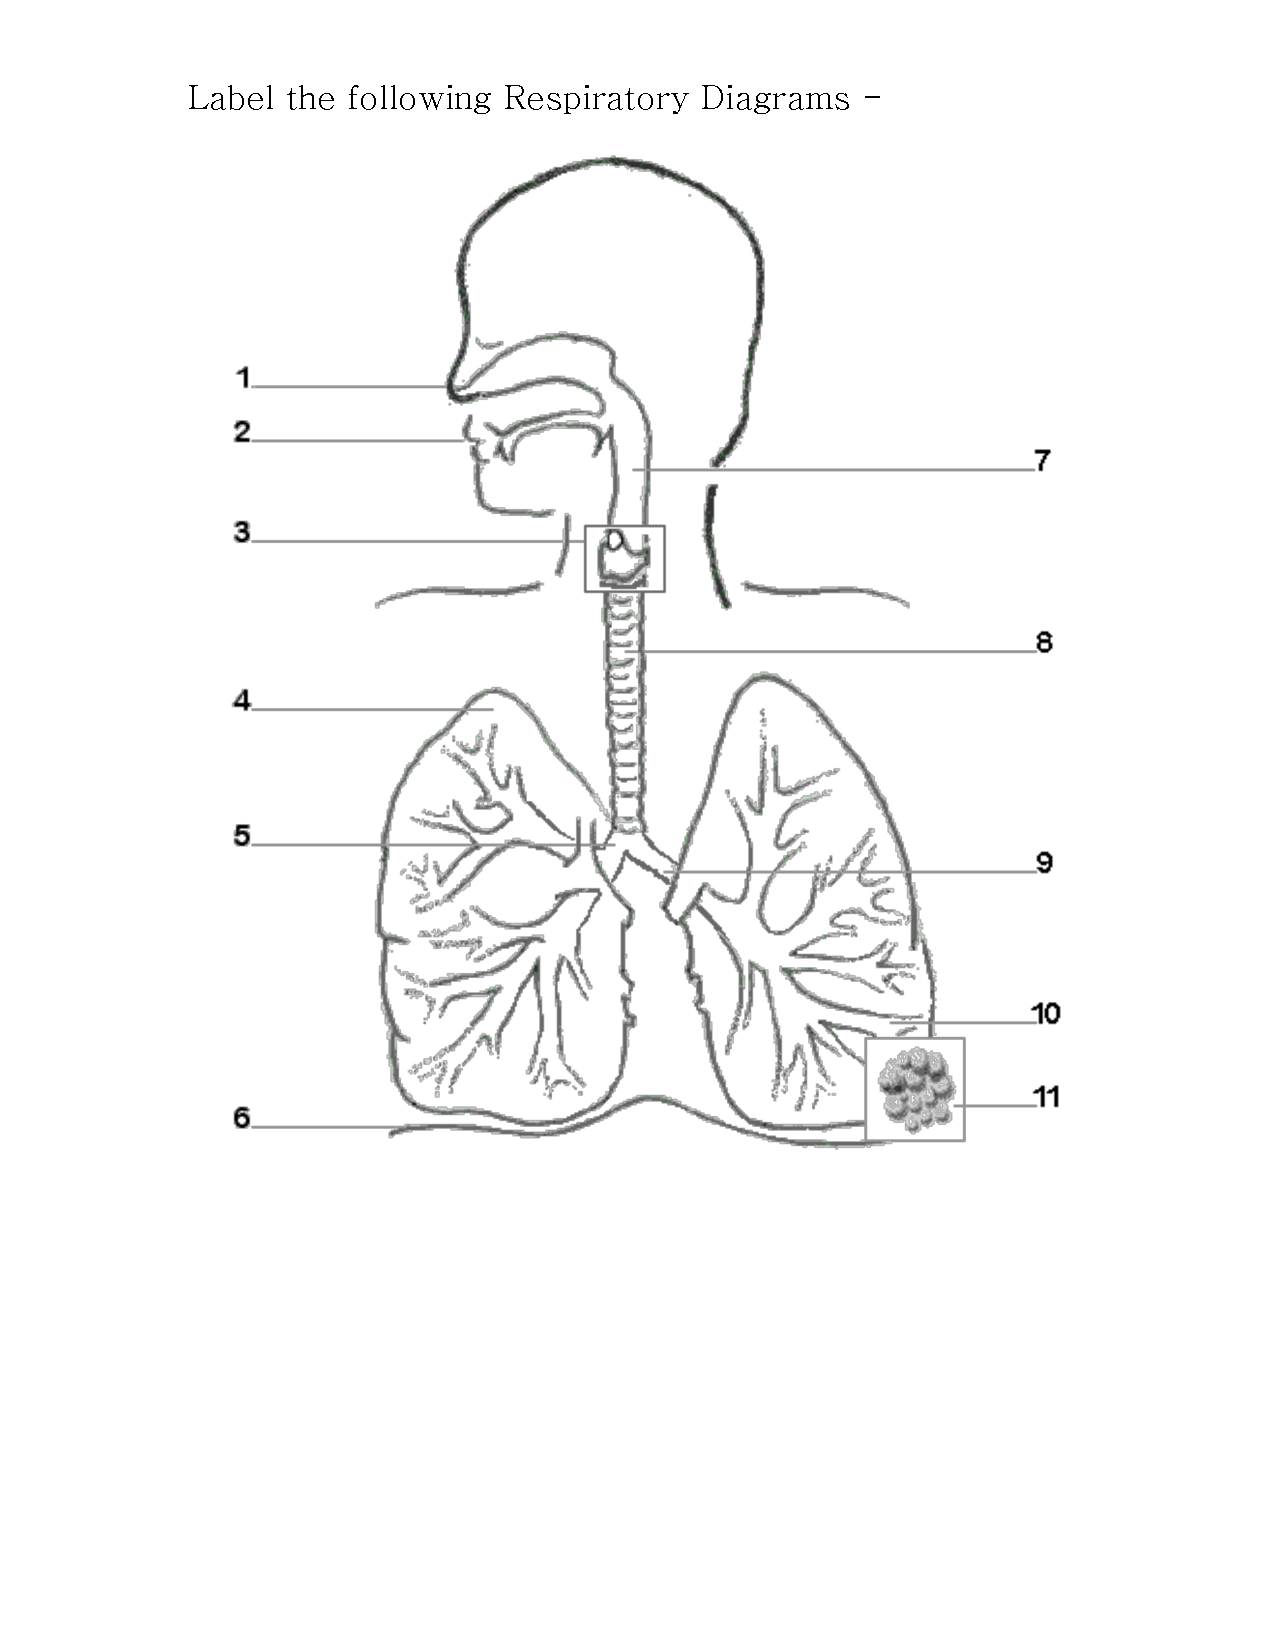 Respiratory System Diagram Worksheet Answers Image